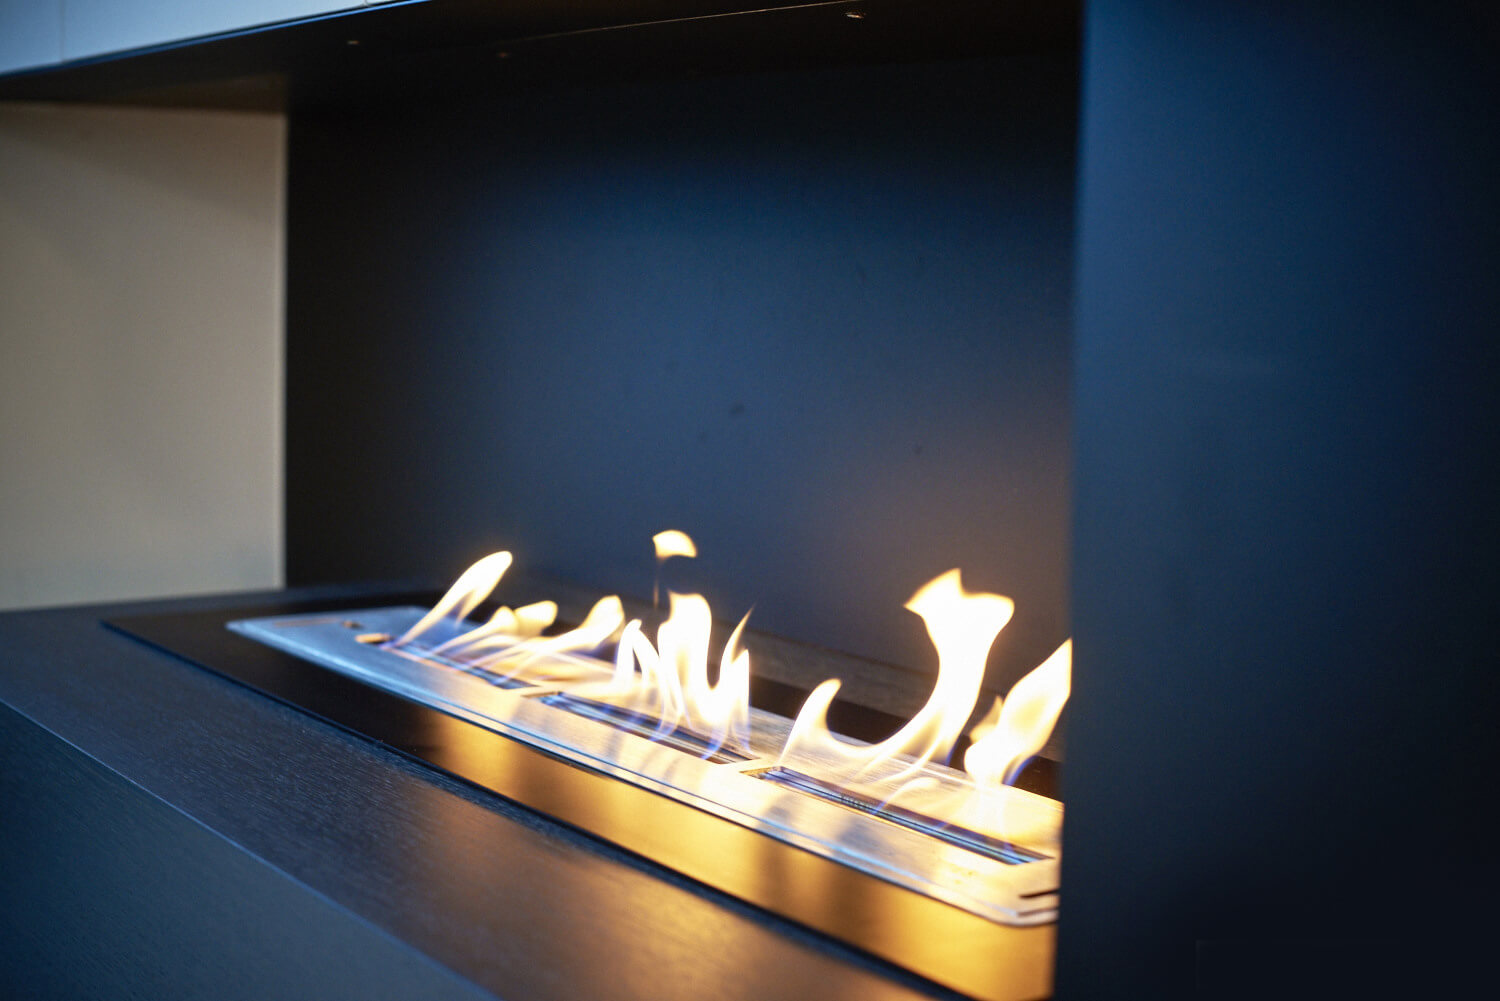 Built-in bioethanol fireplace - burning flames